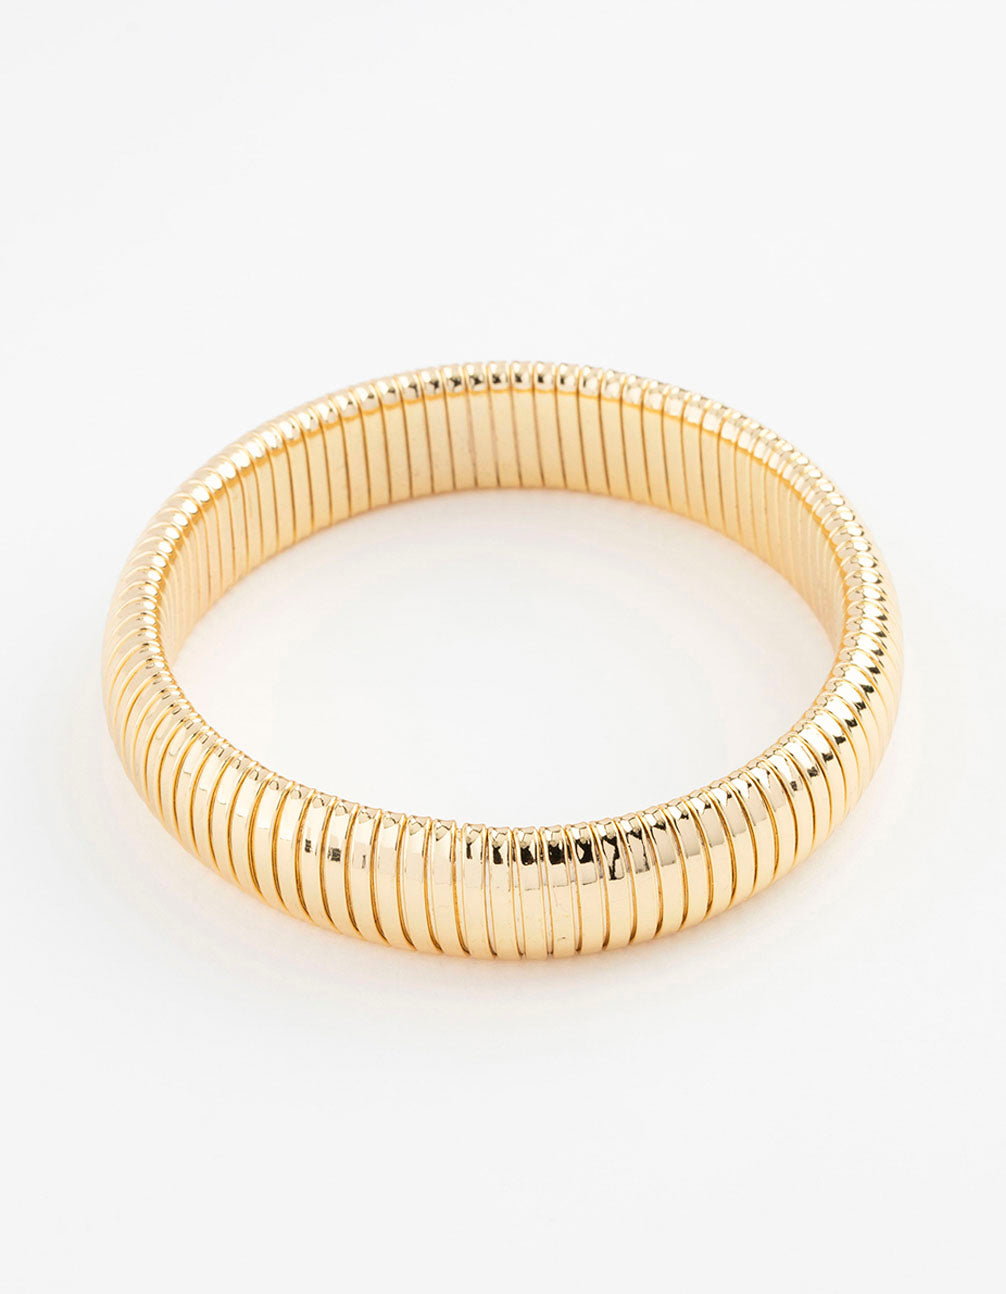 Gold Bracelet for Women and Teen Girls, Dainty Gold Slider Bracelet With  Pear Shaped Stones, Simple Gold Bracelet With Cubic Zirconia Stones 